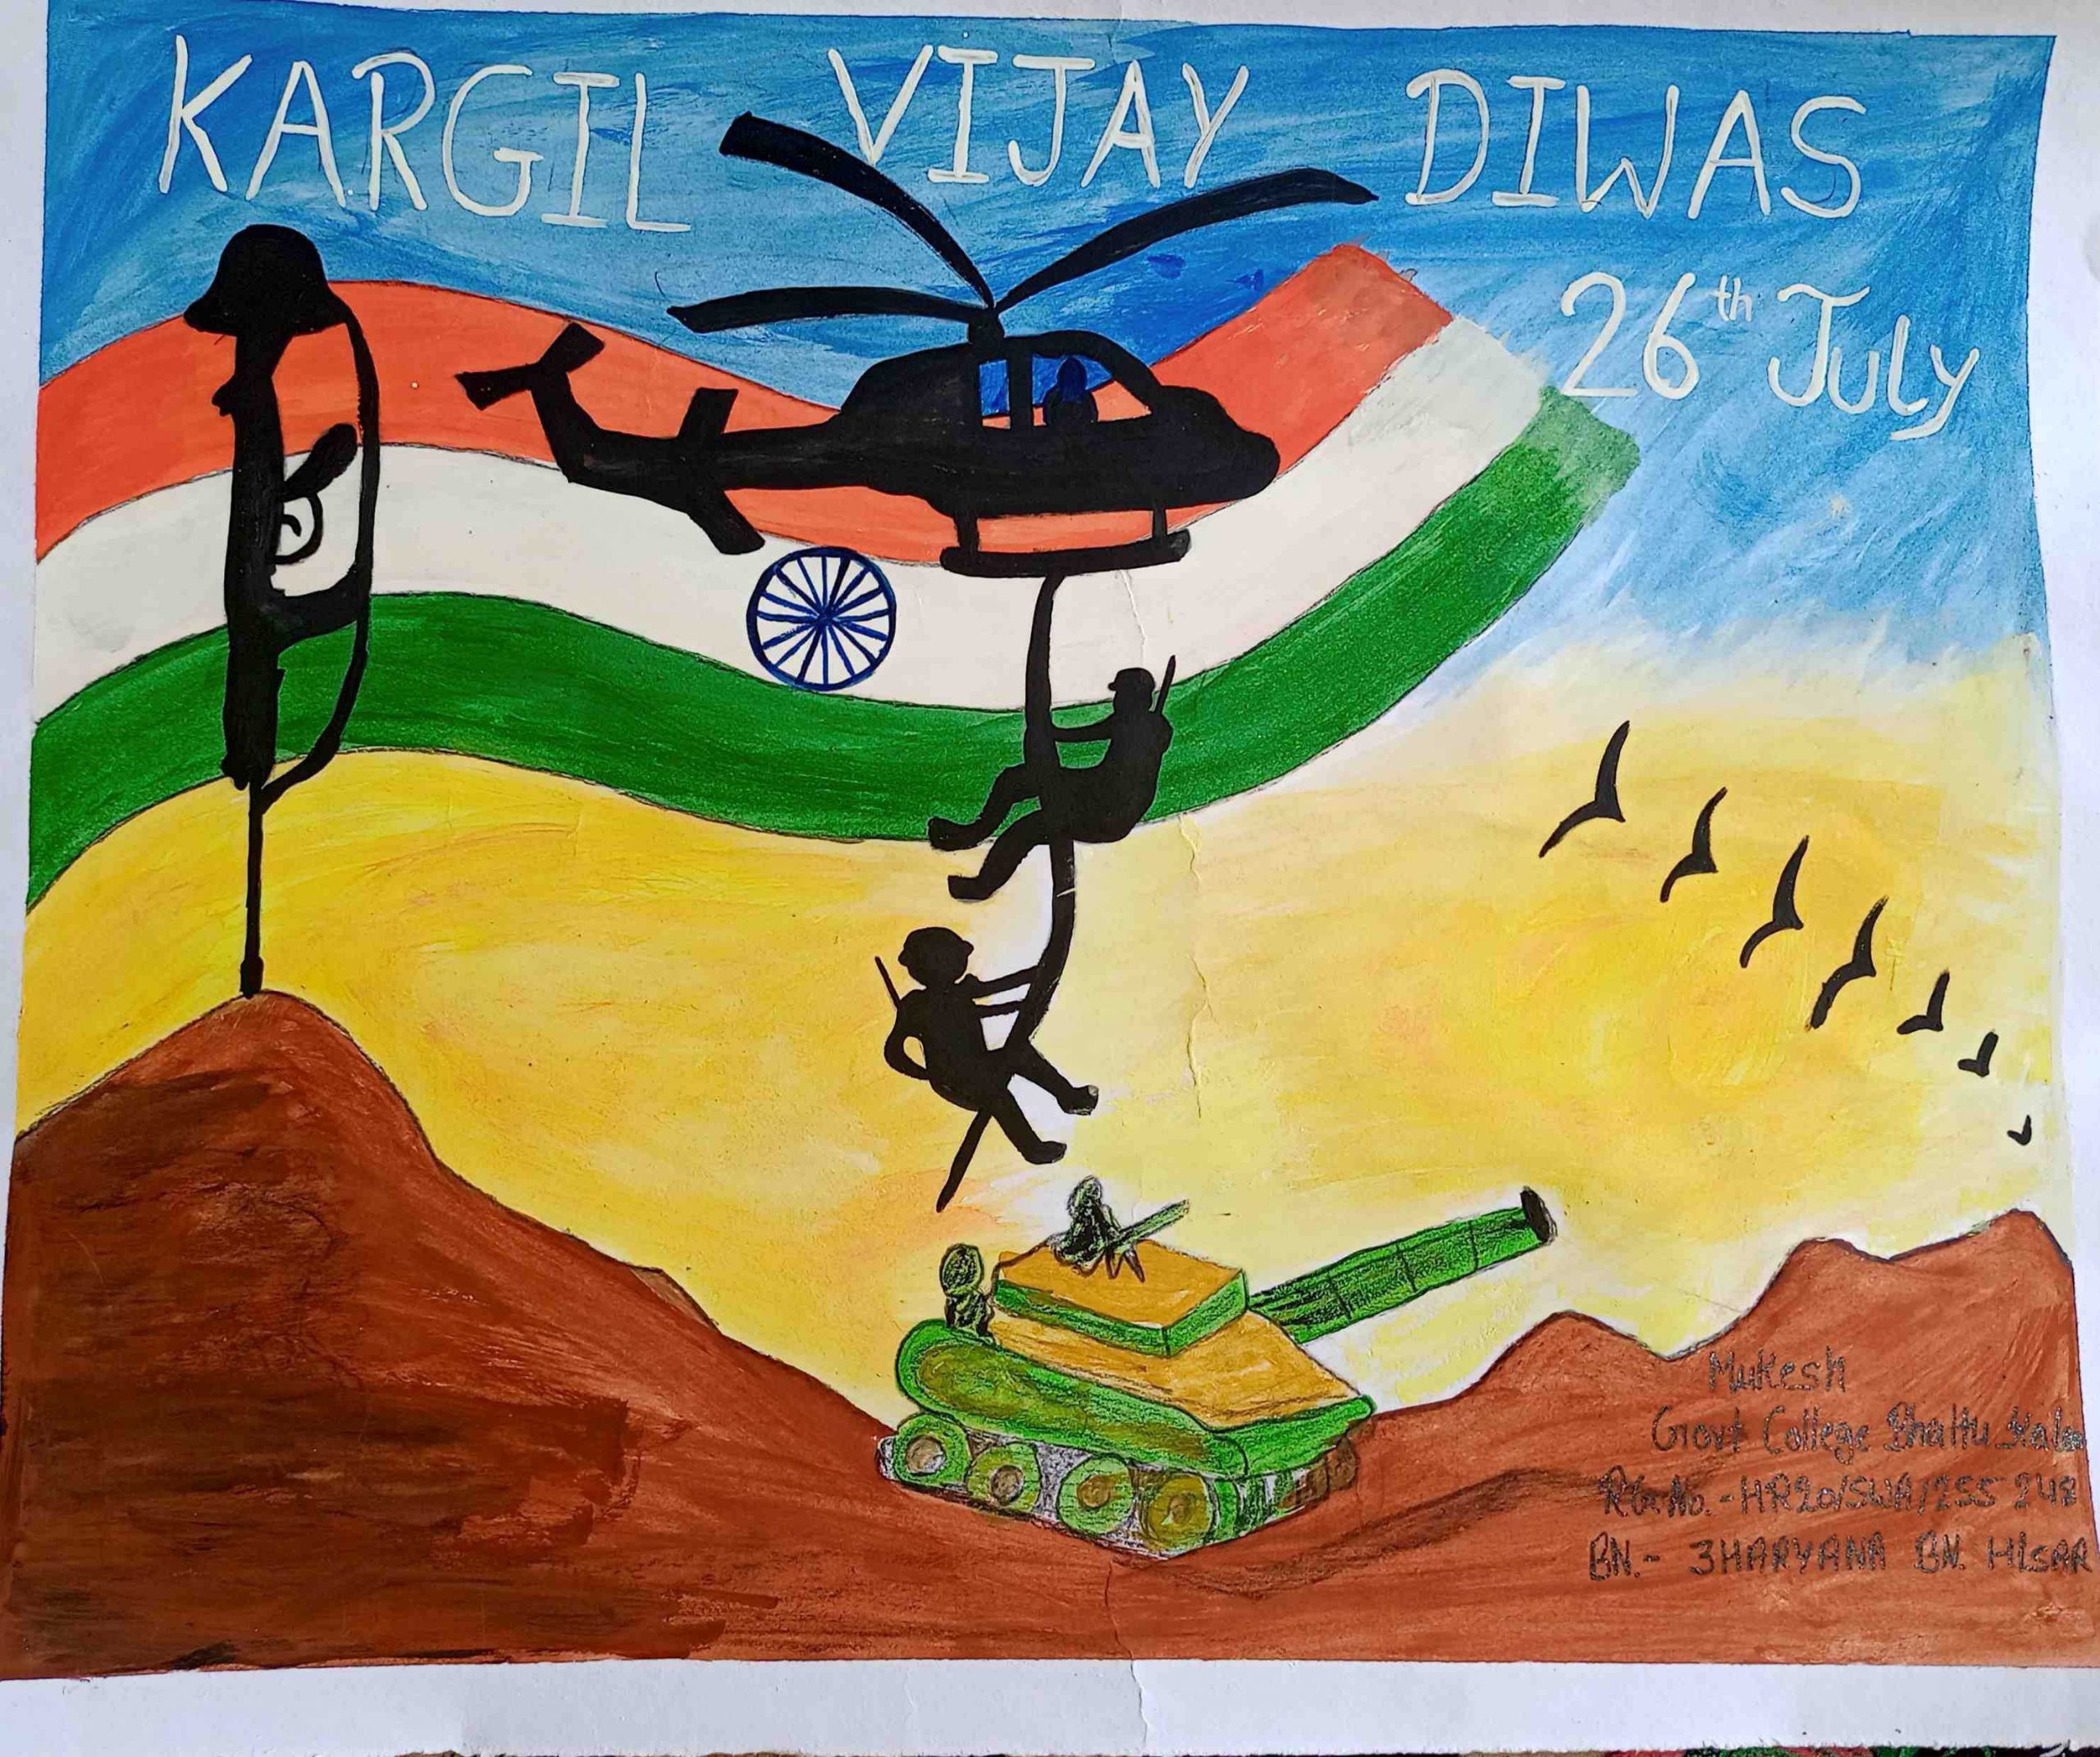 kargil vijay diwas poster drawing || step by step || kargil day painting 26  on July - YouTube